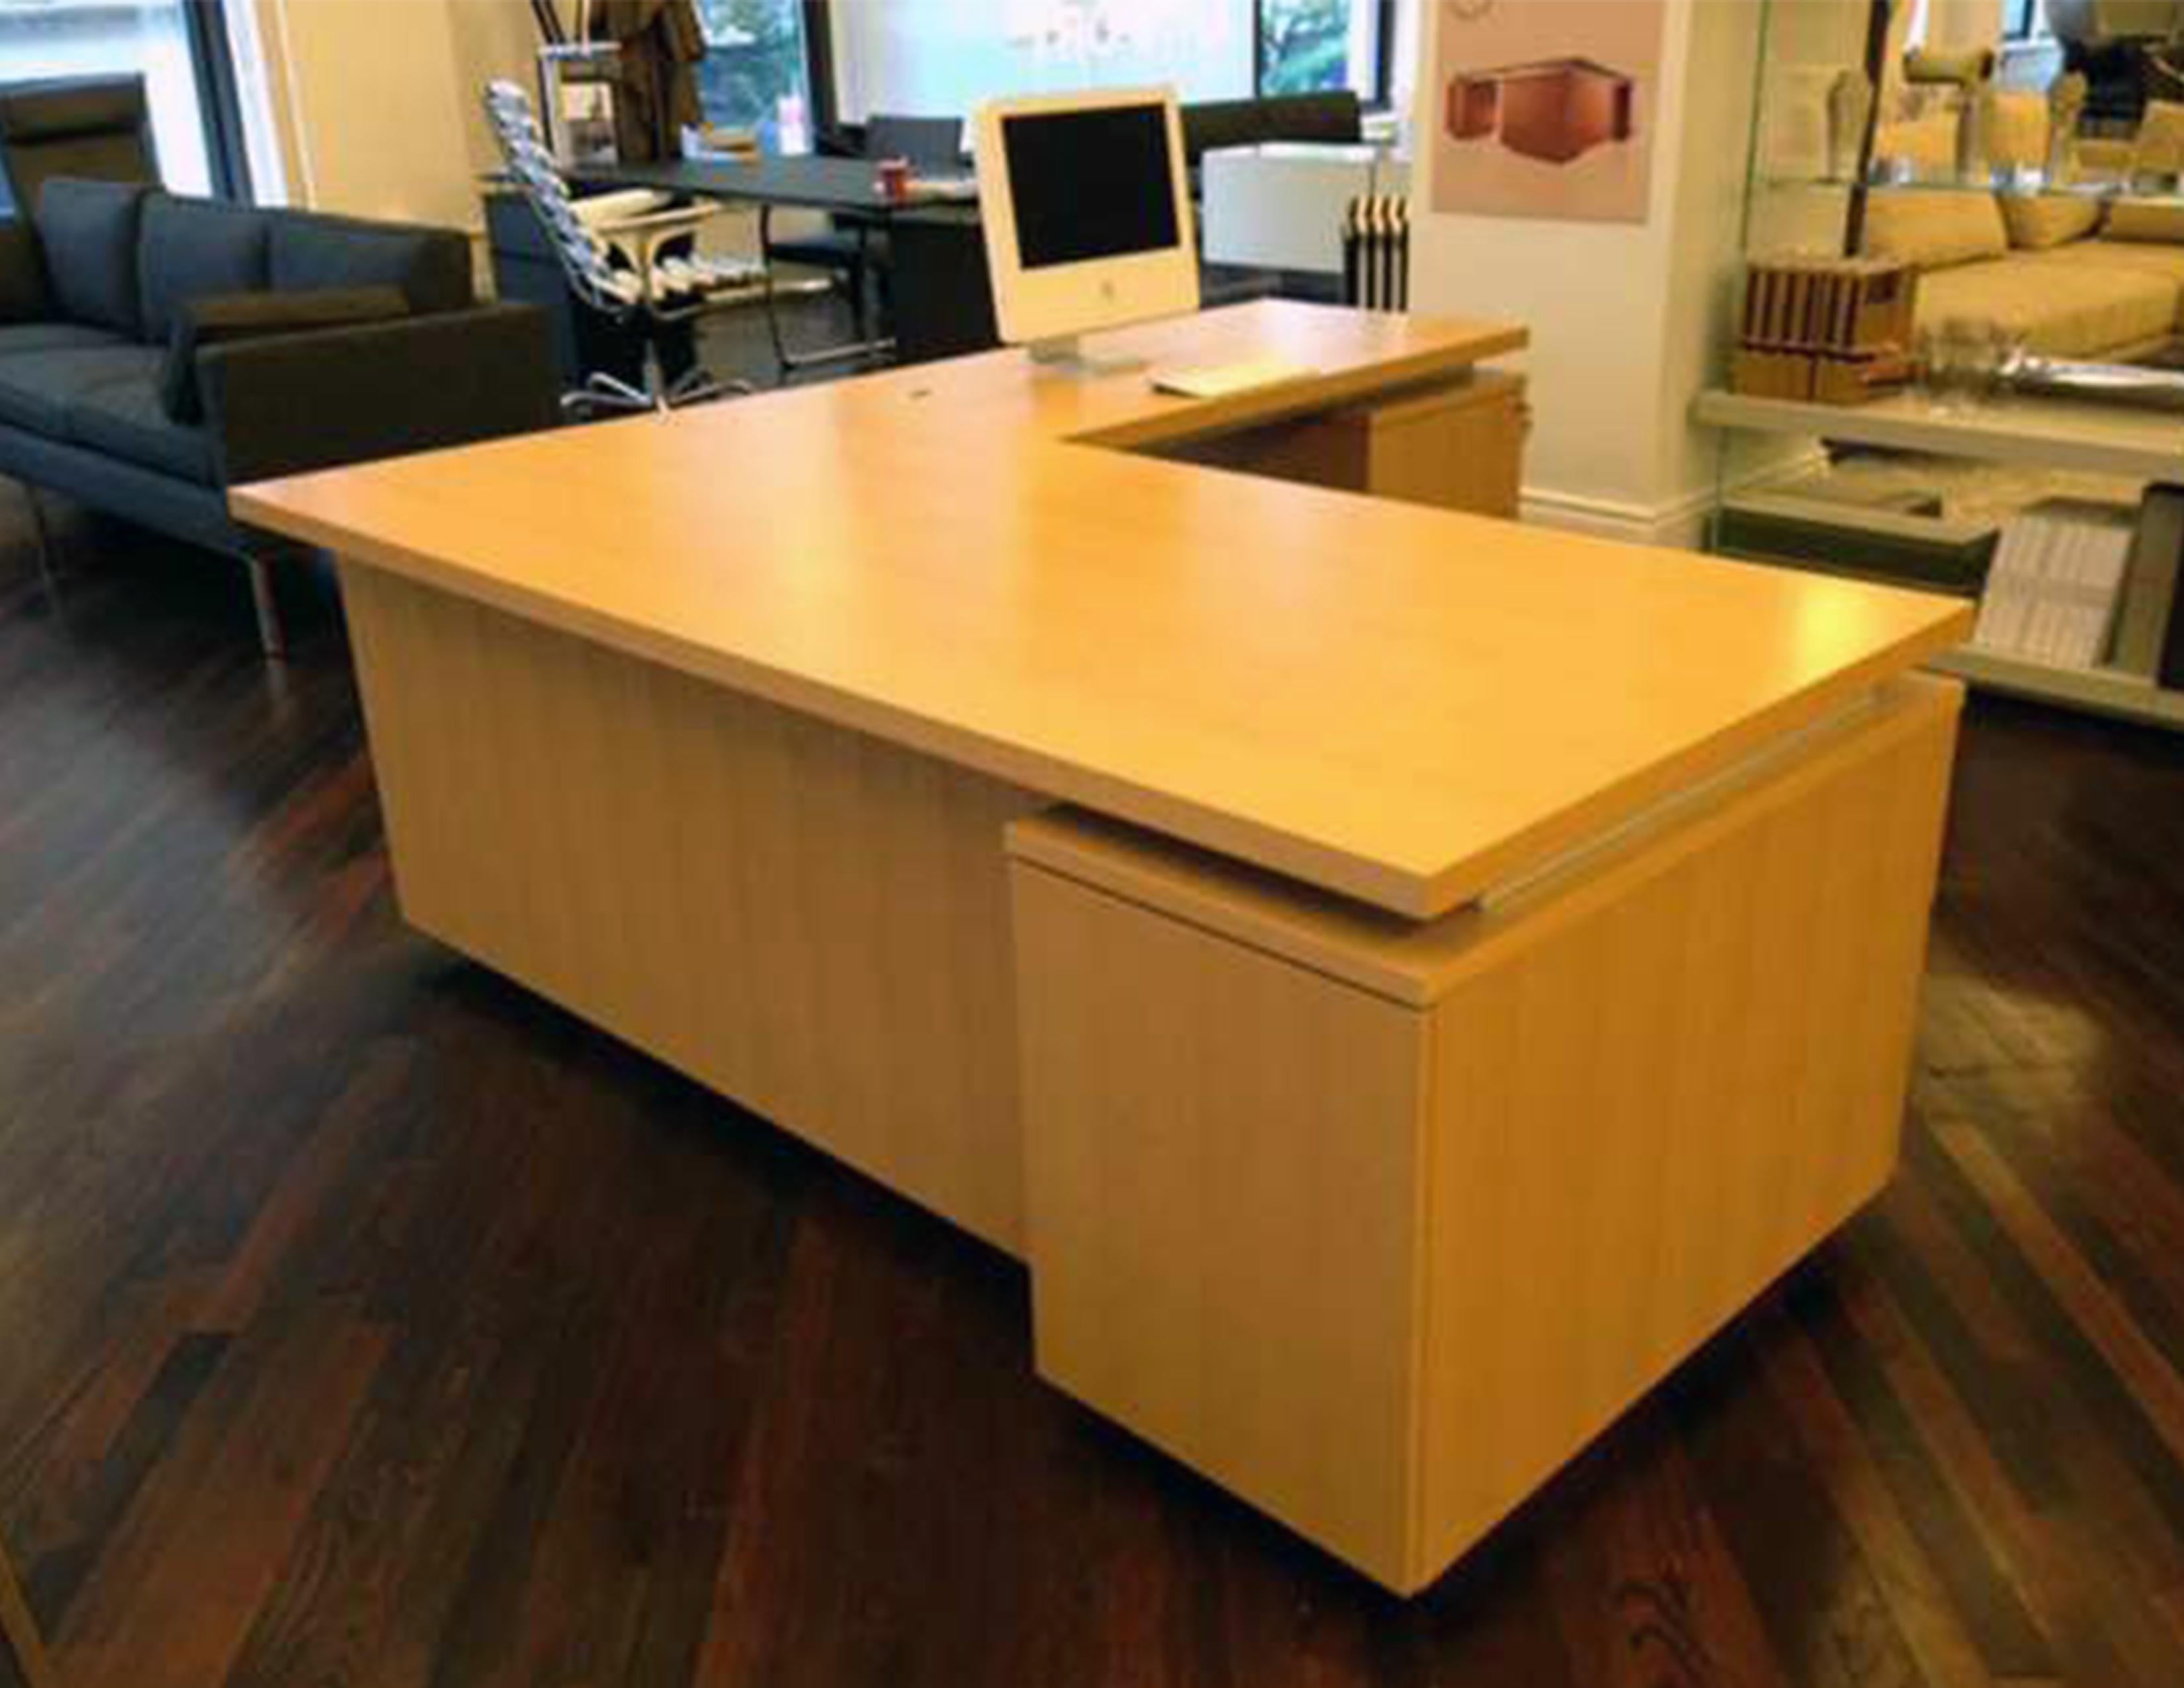 (1) M2L Brand L- Desk (NYSR)
Wood finish: Anigre
Desk size:
36